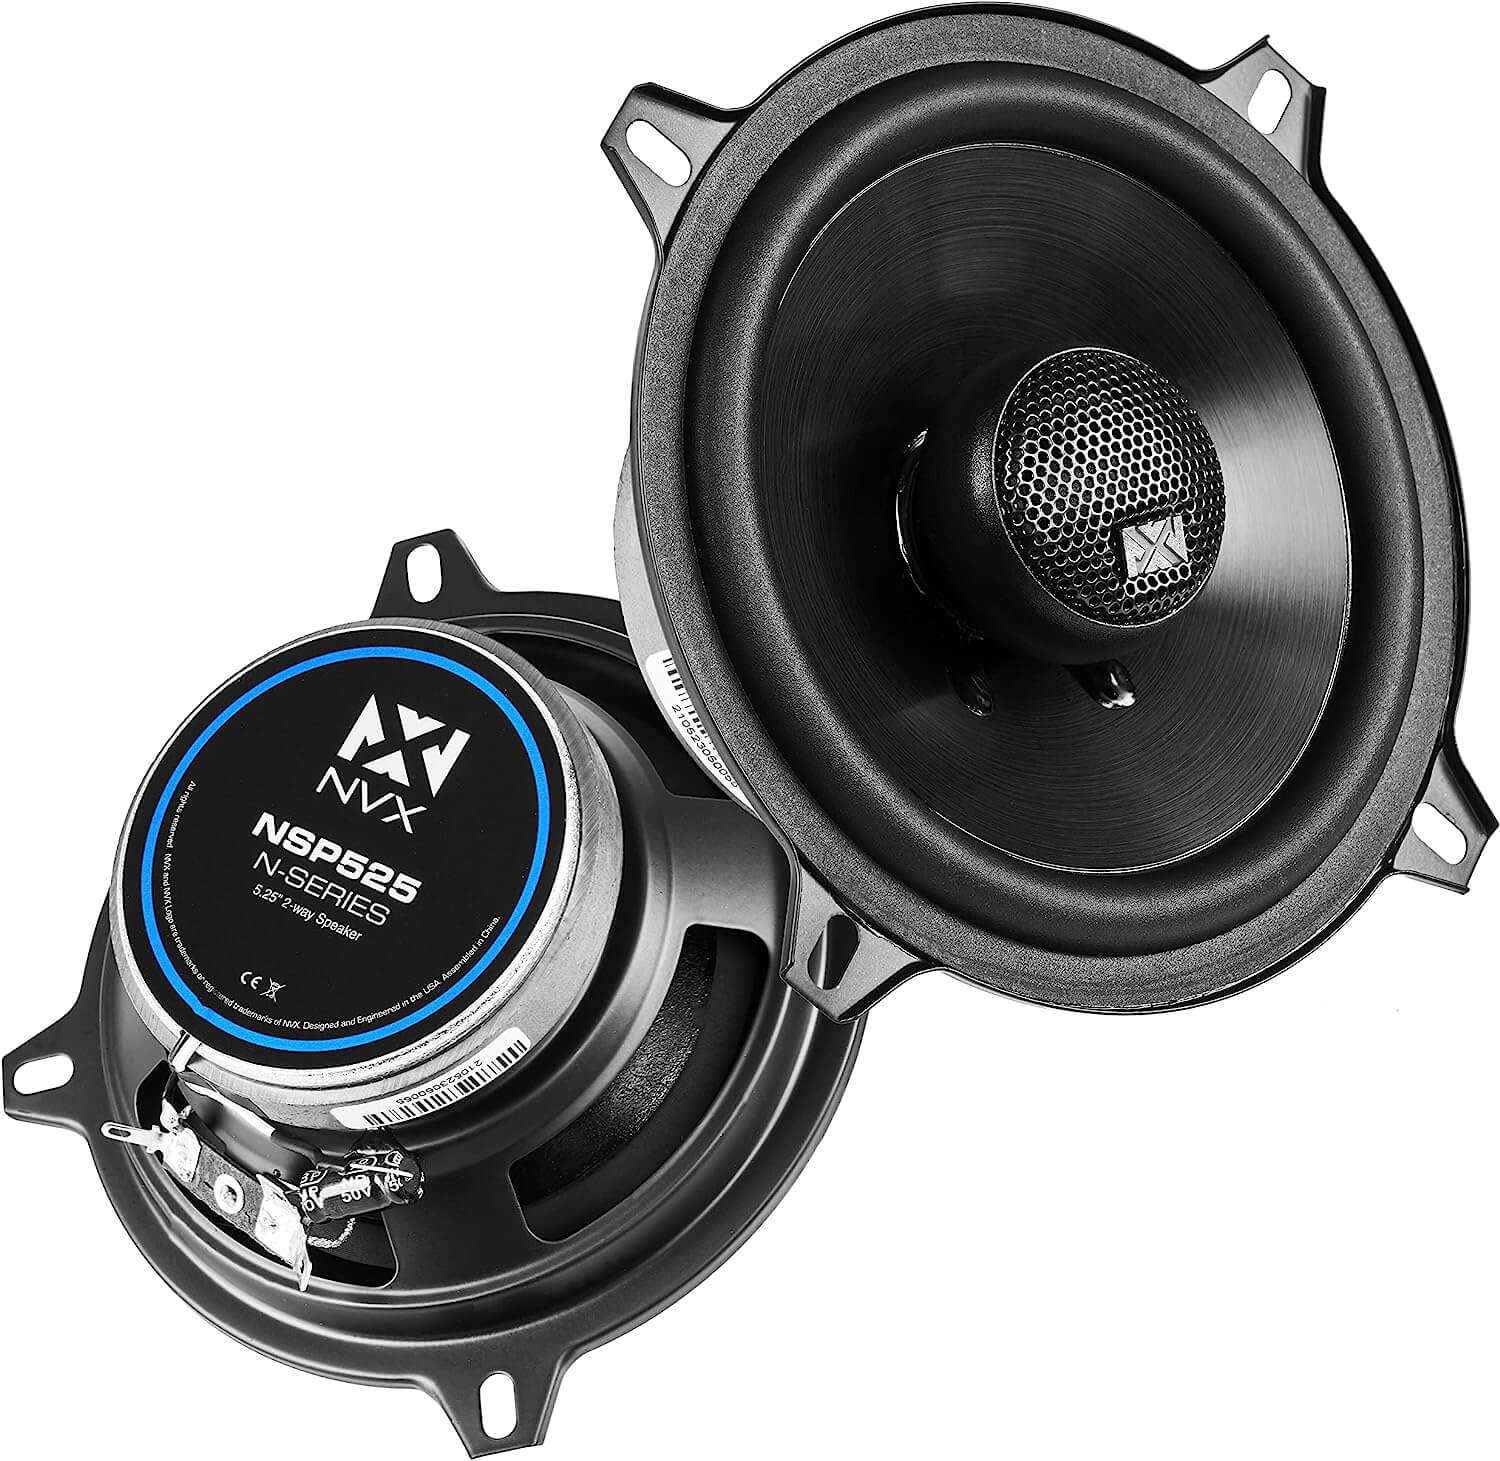 NVX NSP525 best 3.5 speakers